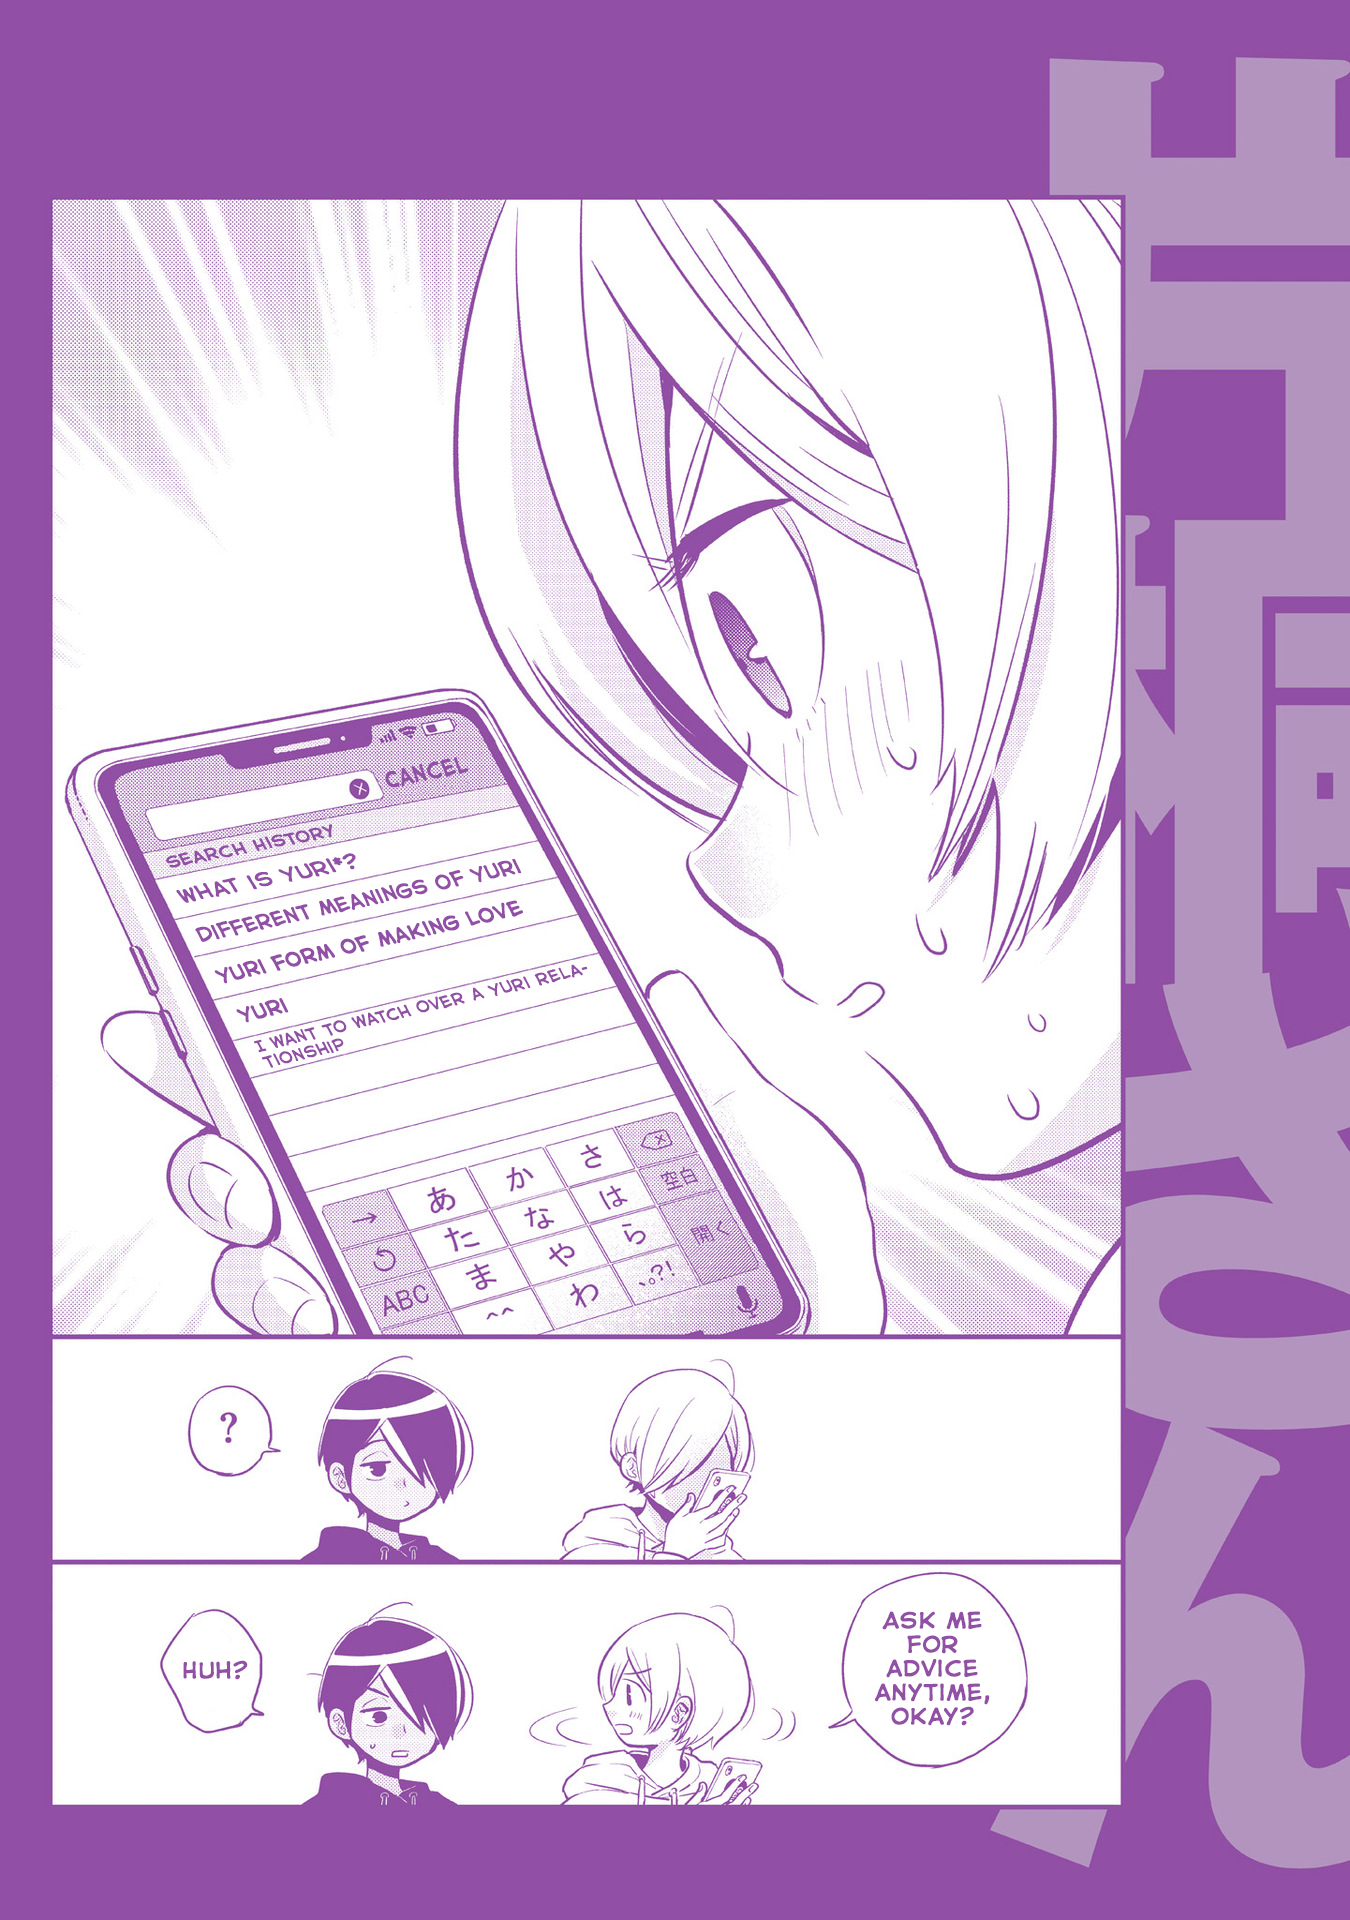 Read Giri Giri Saegiru Katagirisan Manga English [new Chapters] Online Free Mangaclash